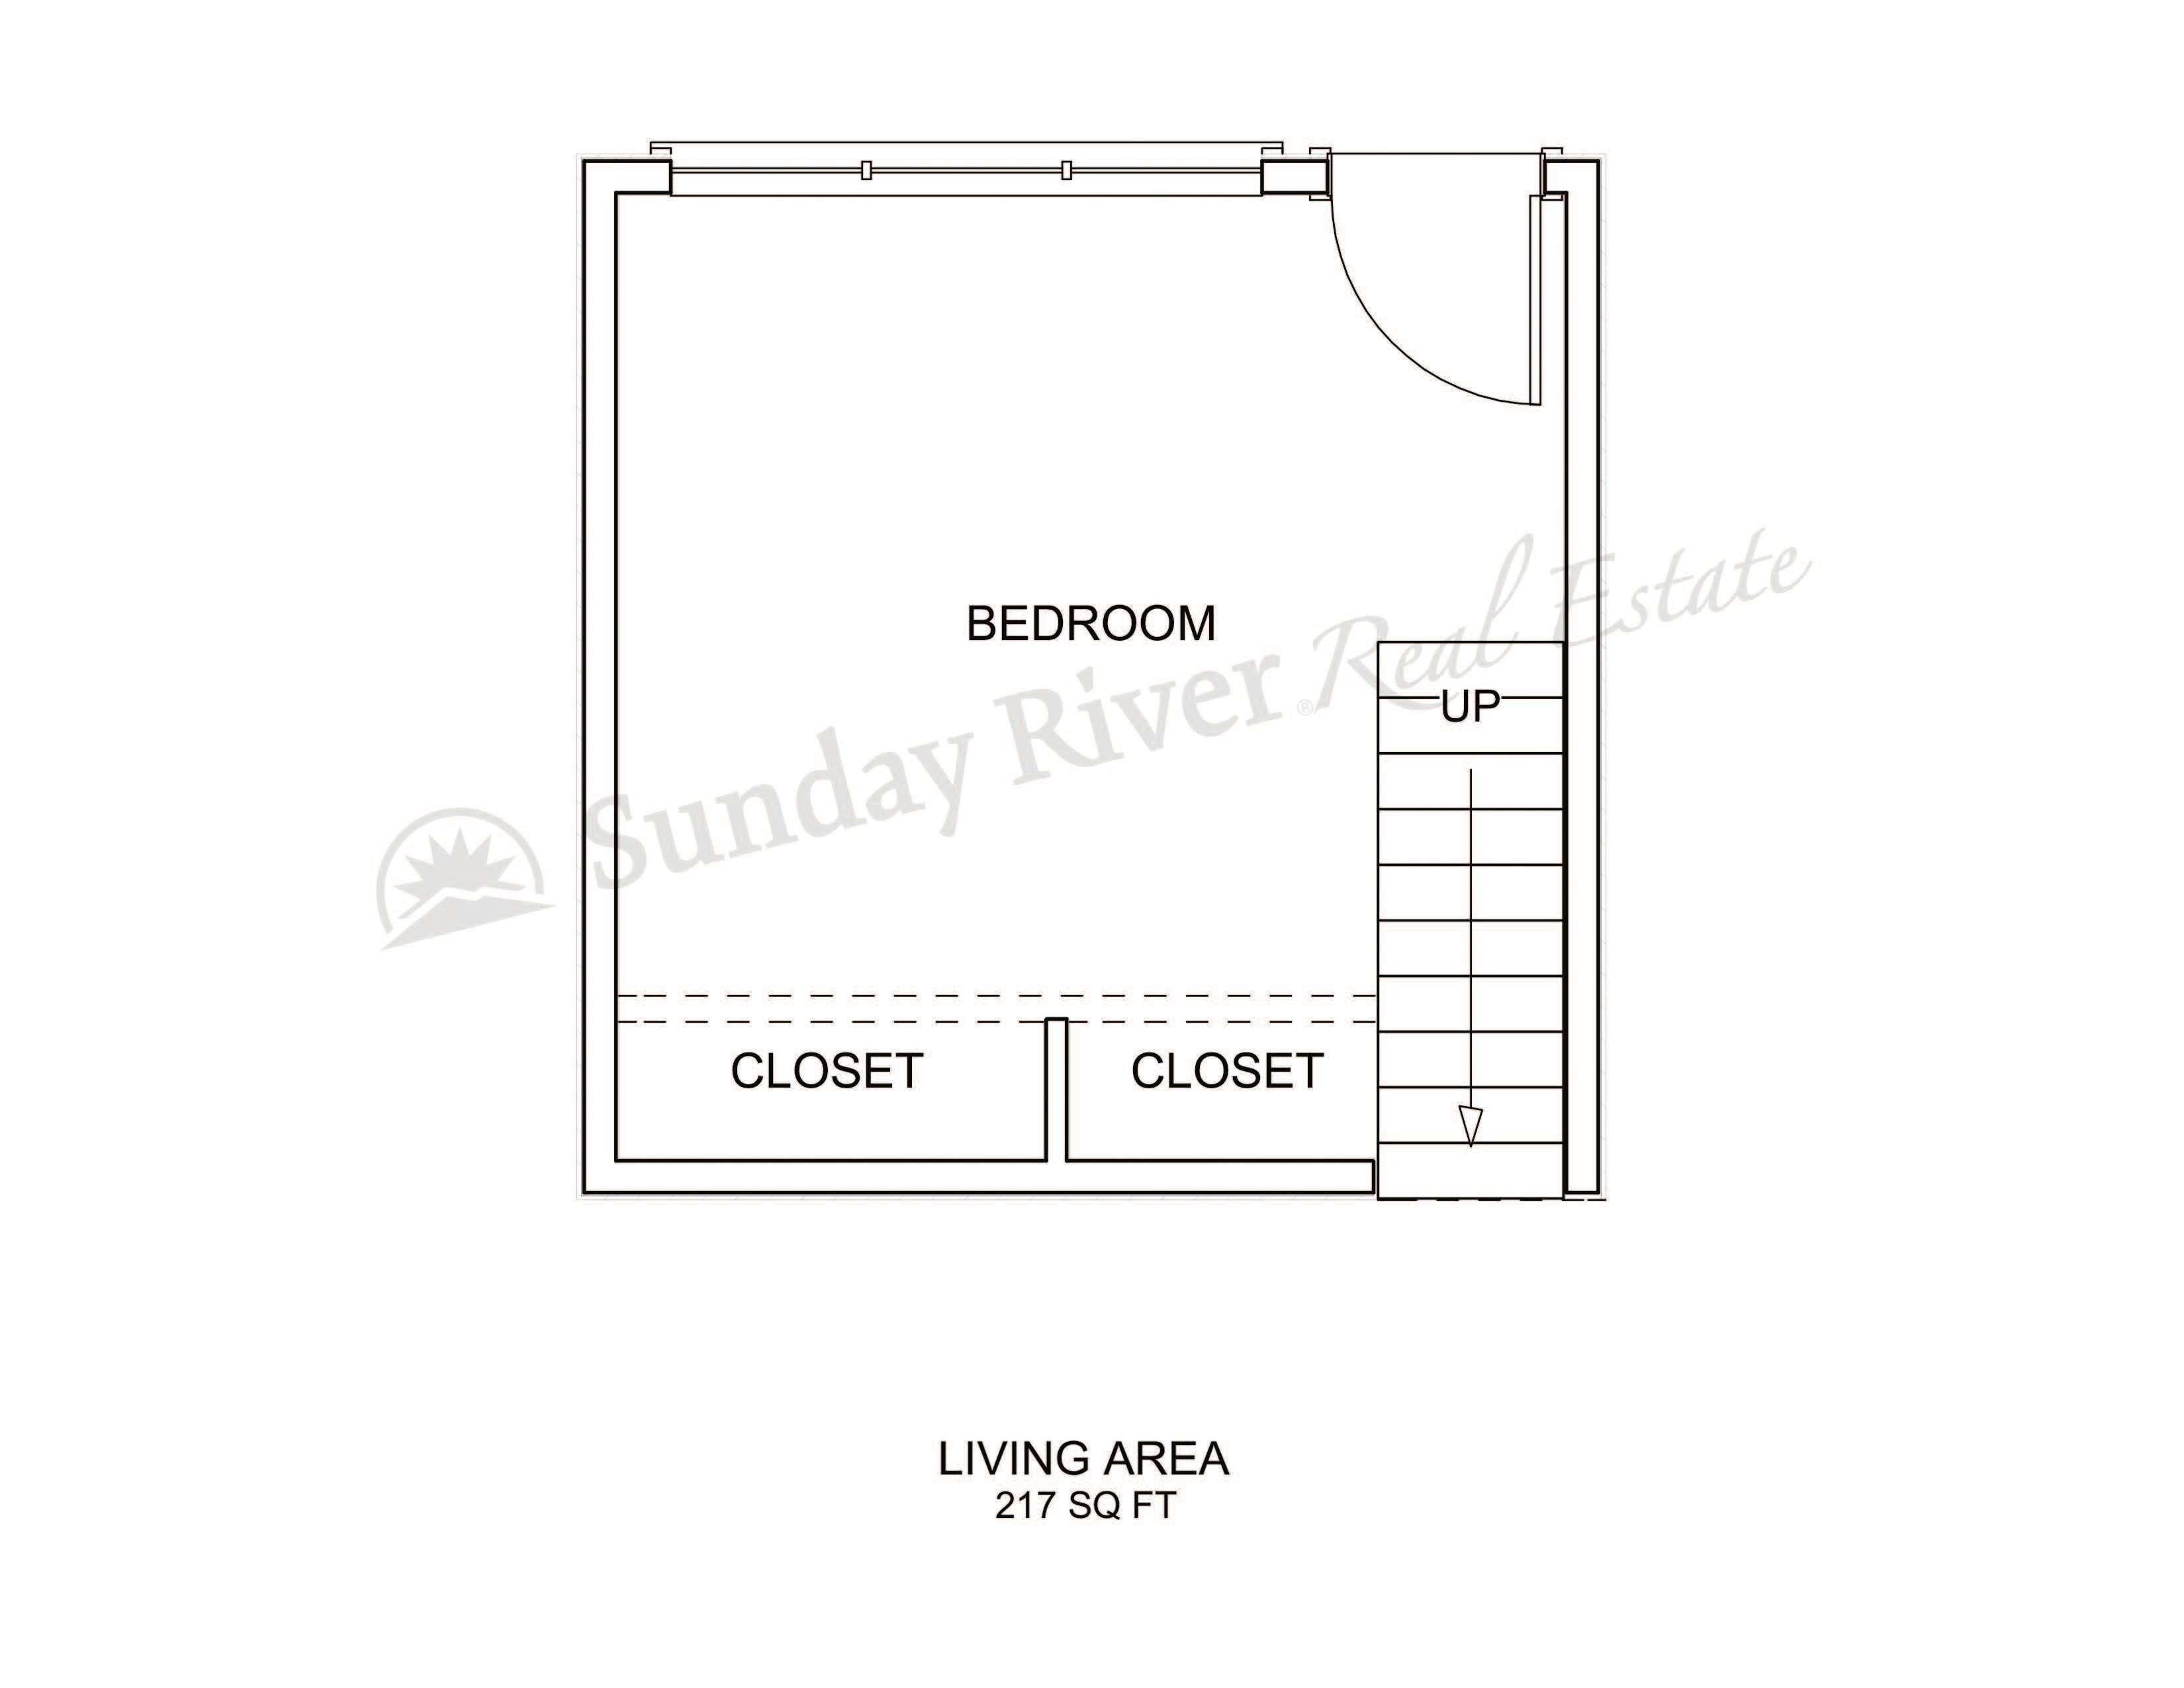 1-Bedroom Floor Plan with Lower Level - Bed